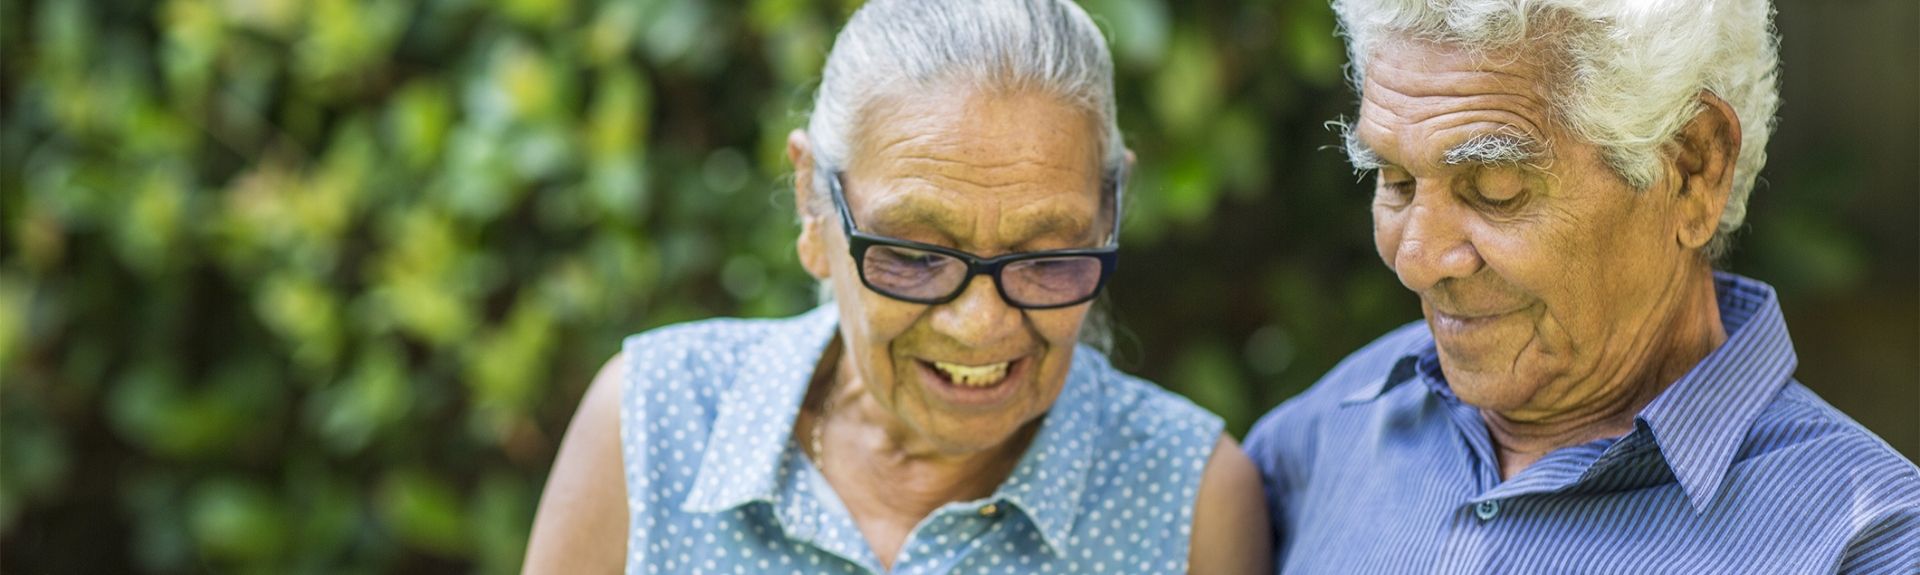 Elderly Indian Couple smiling